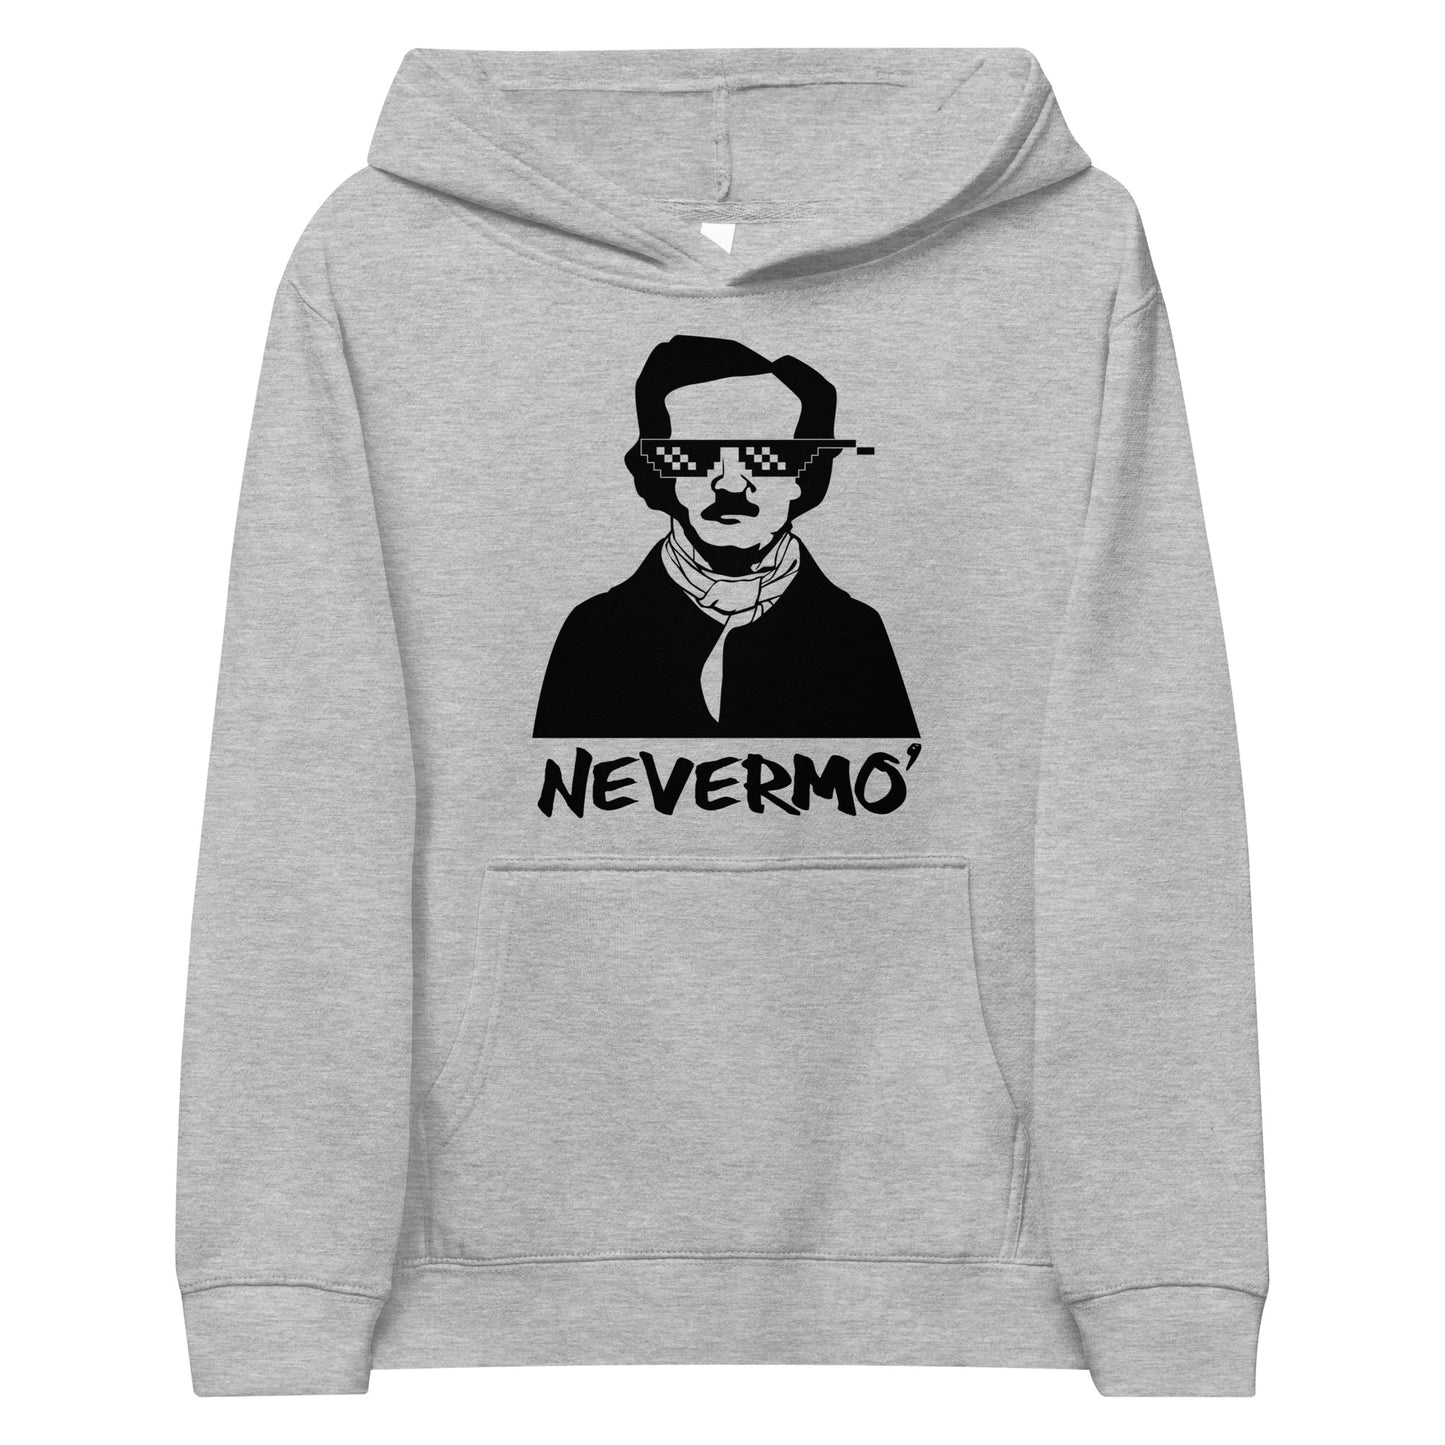 Kids Edgar Allan Poe "Nevermo" fleece hoodie - Athletic Heather Front